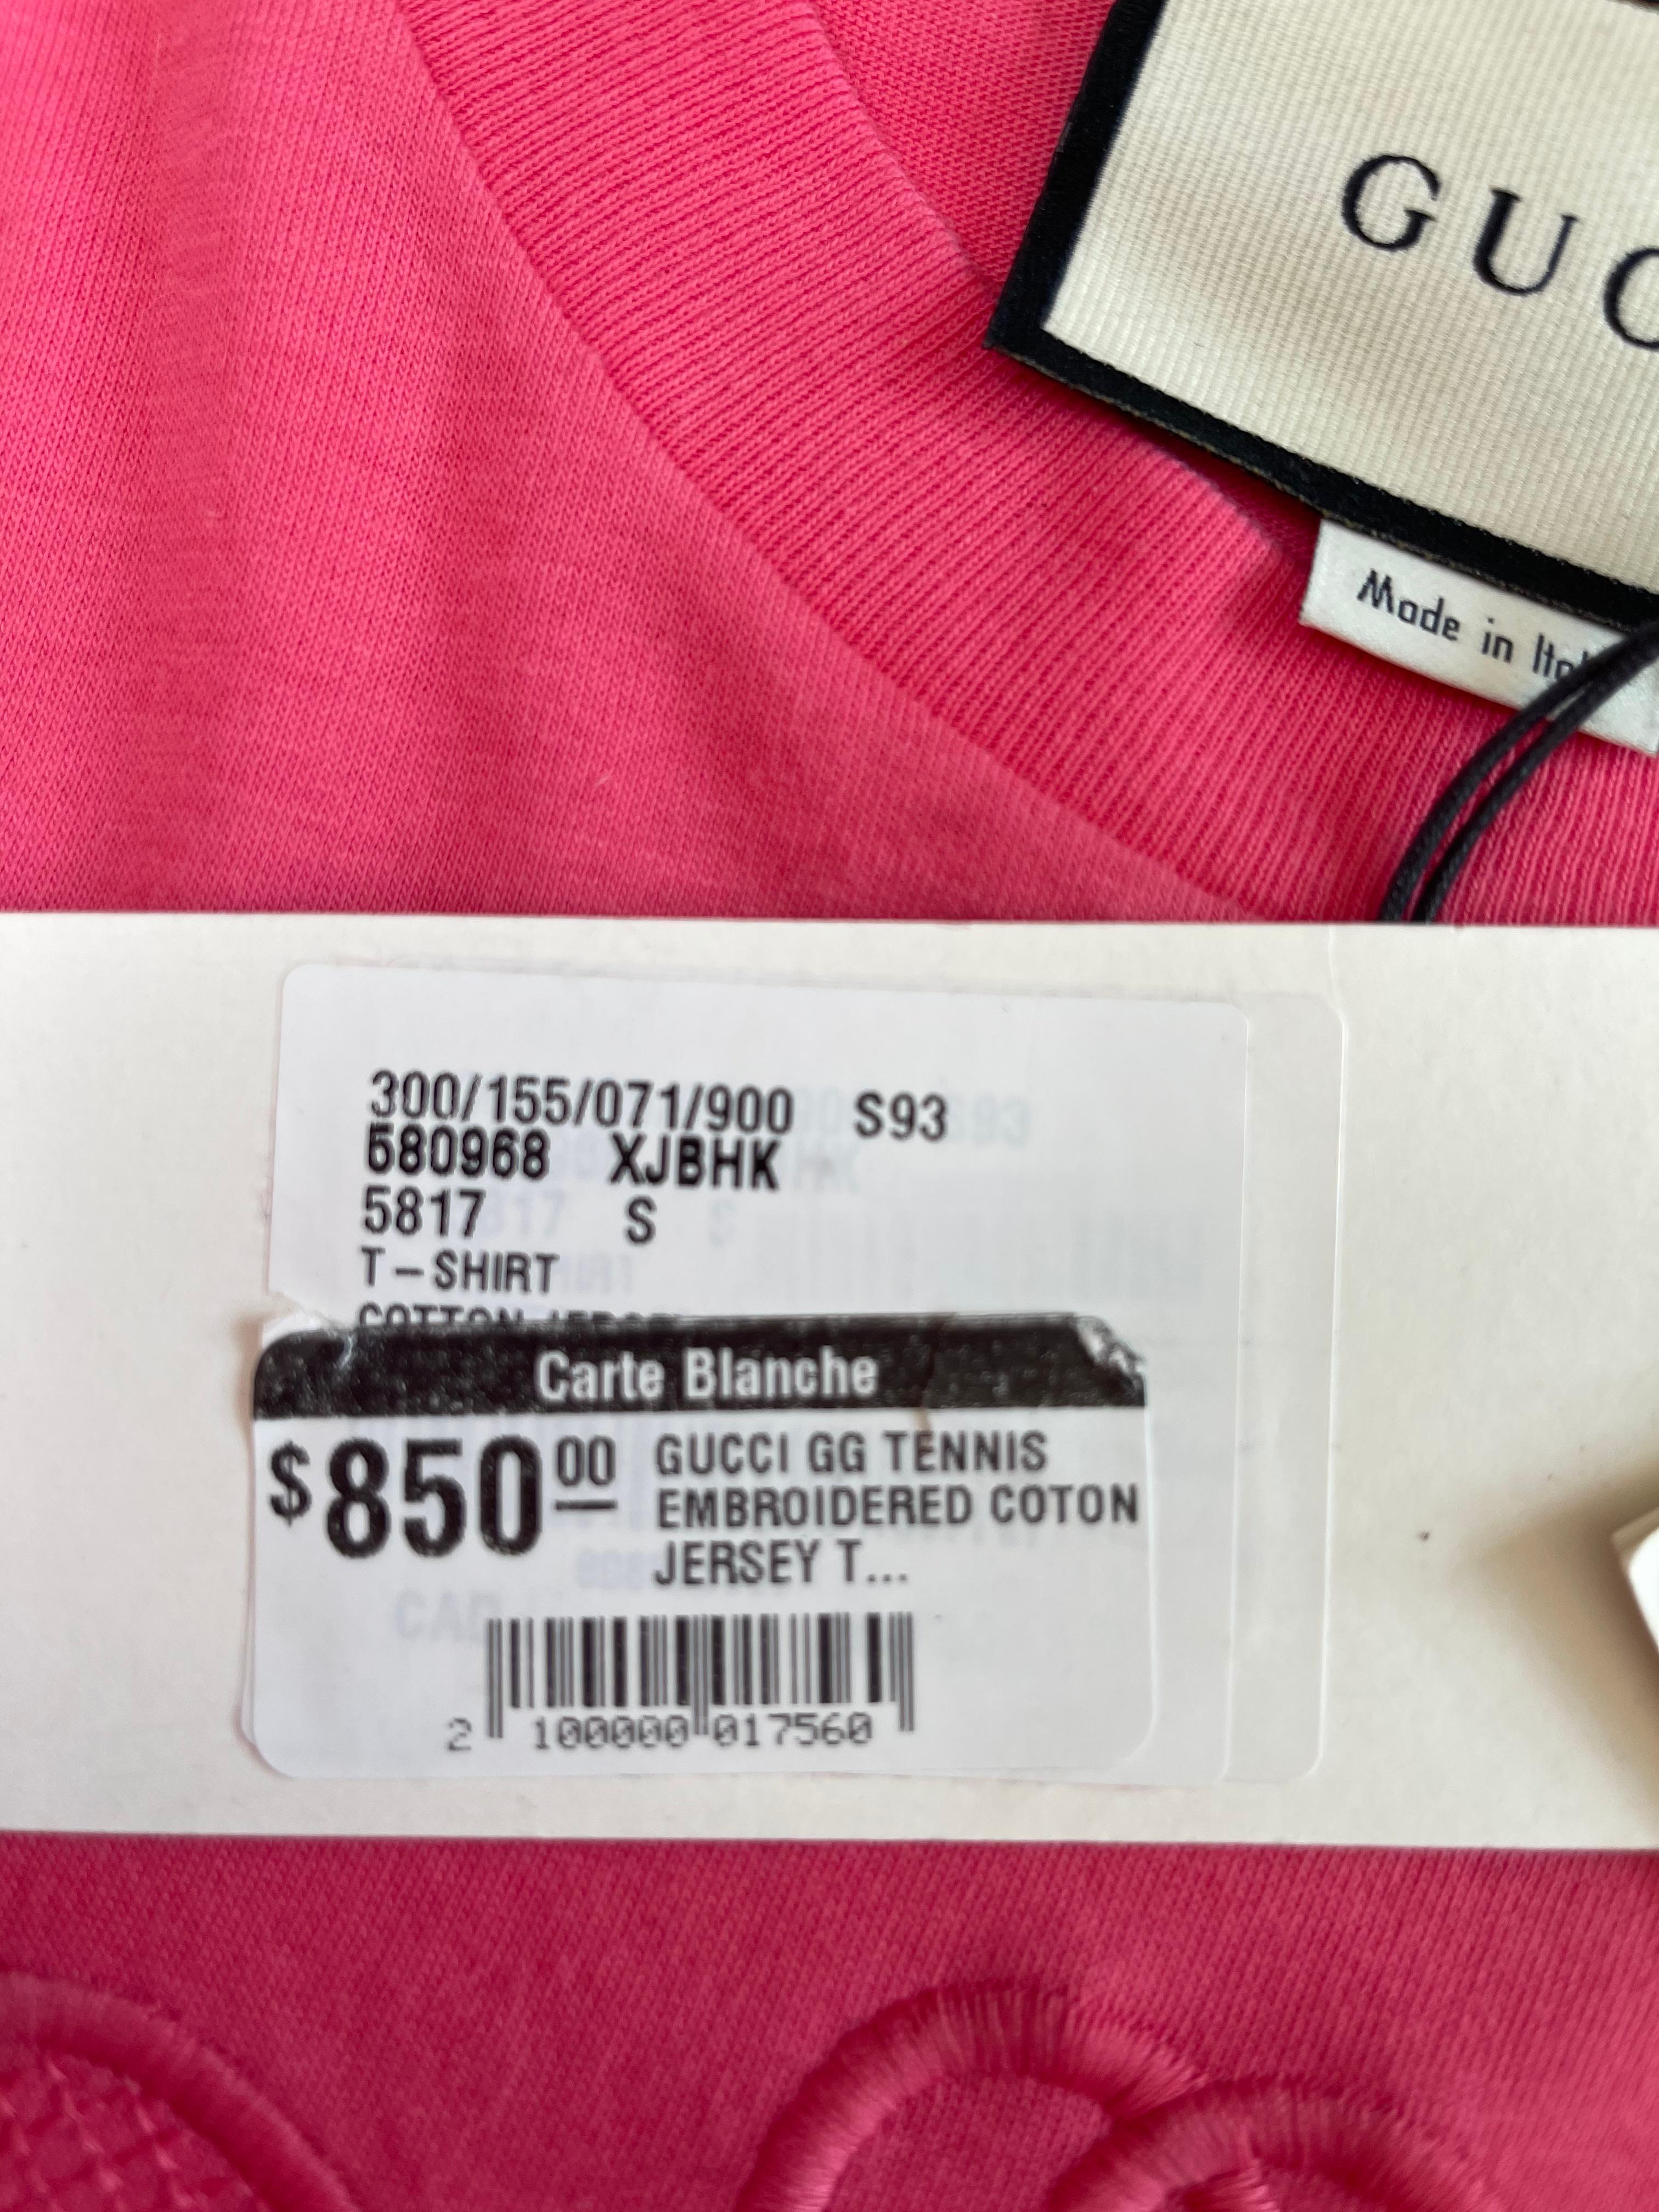 Gucci GG Tennis Pink Cotton Logo T-Shirt - Small (580968) 1